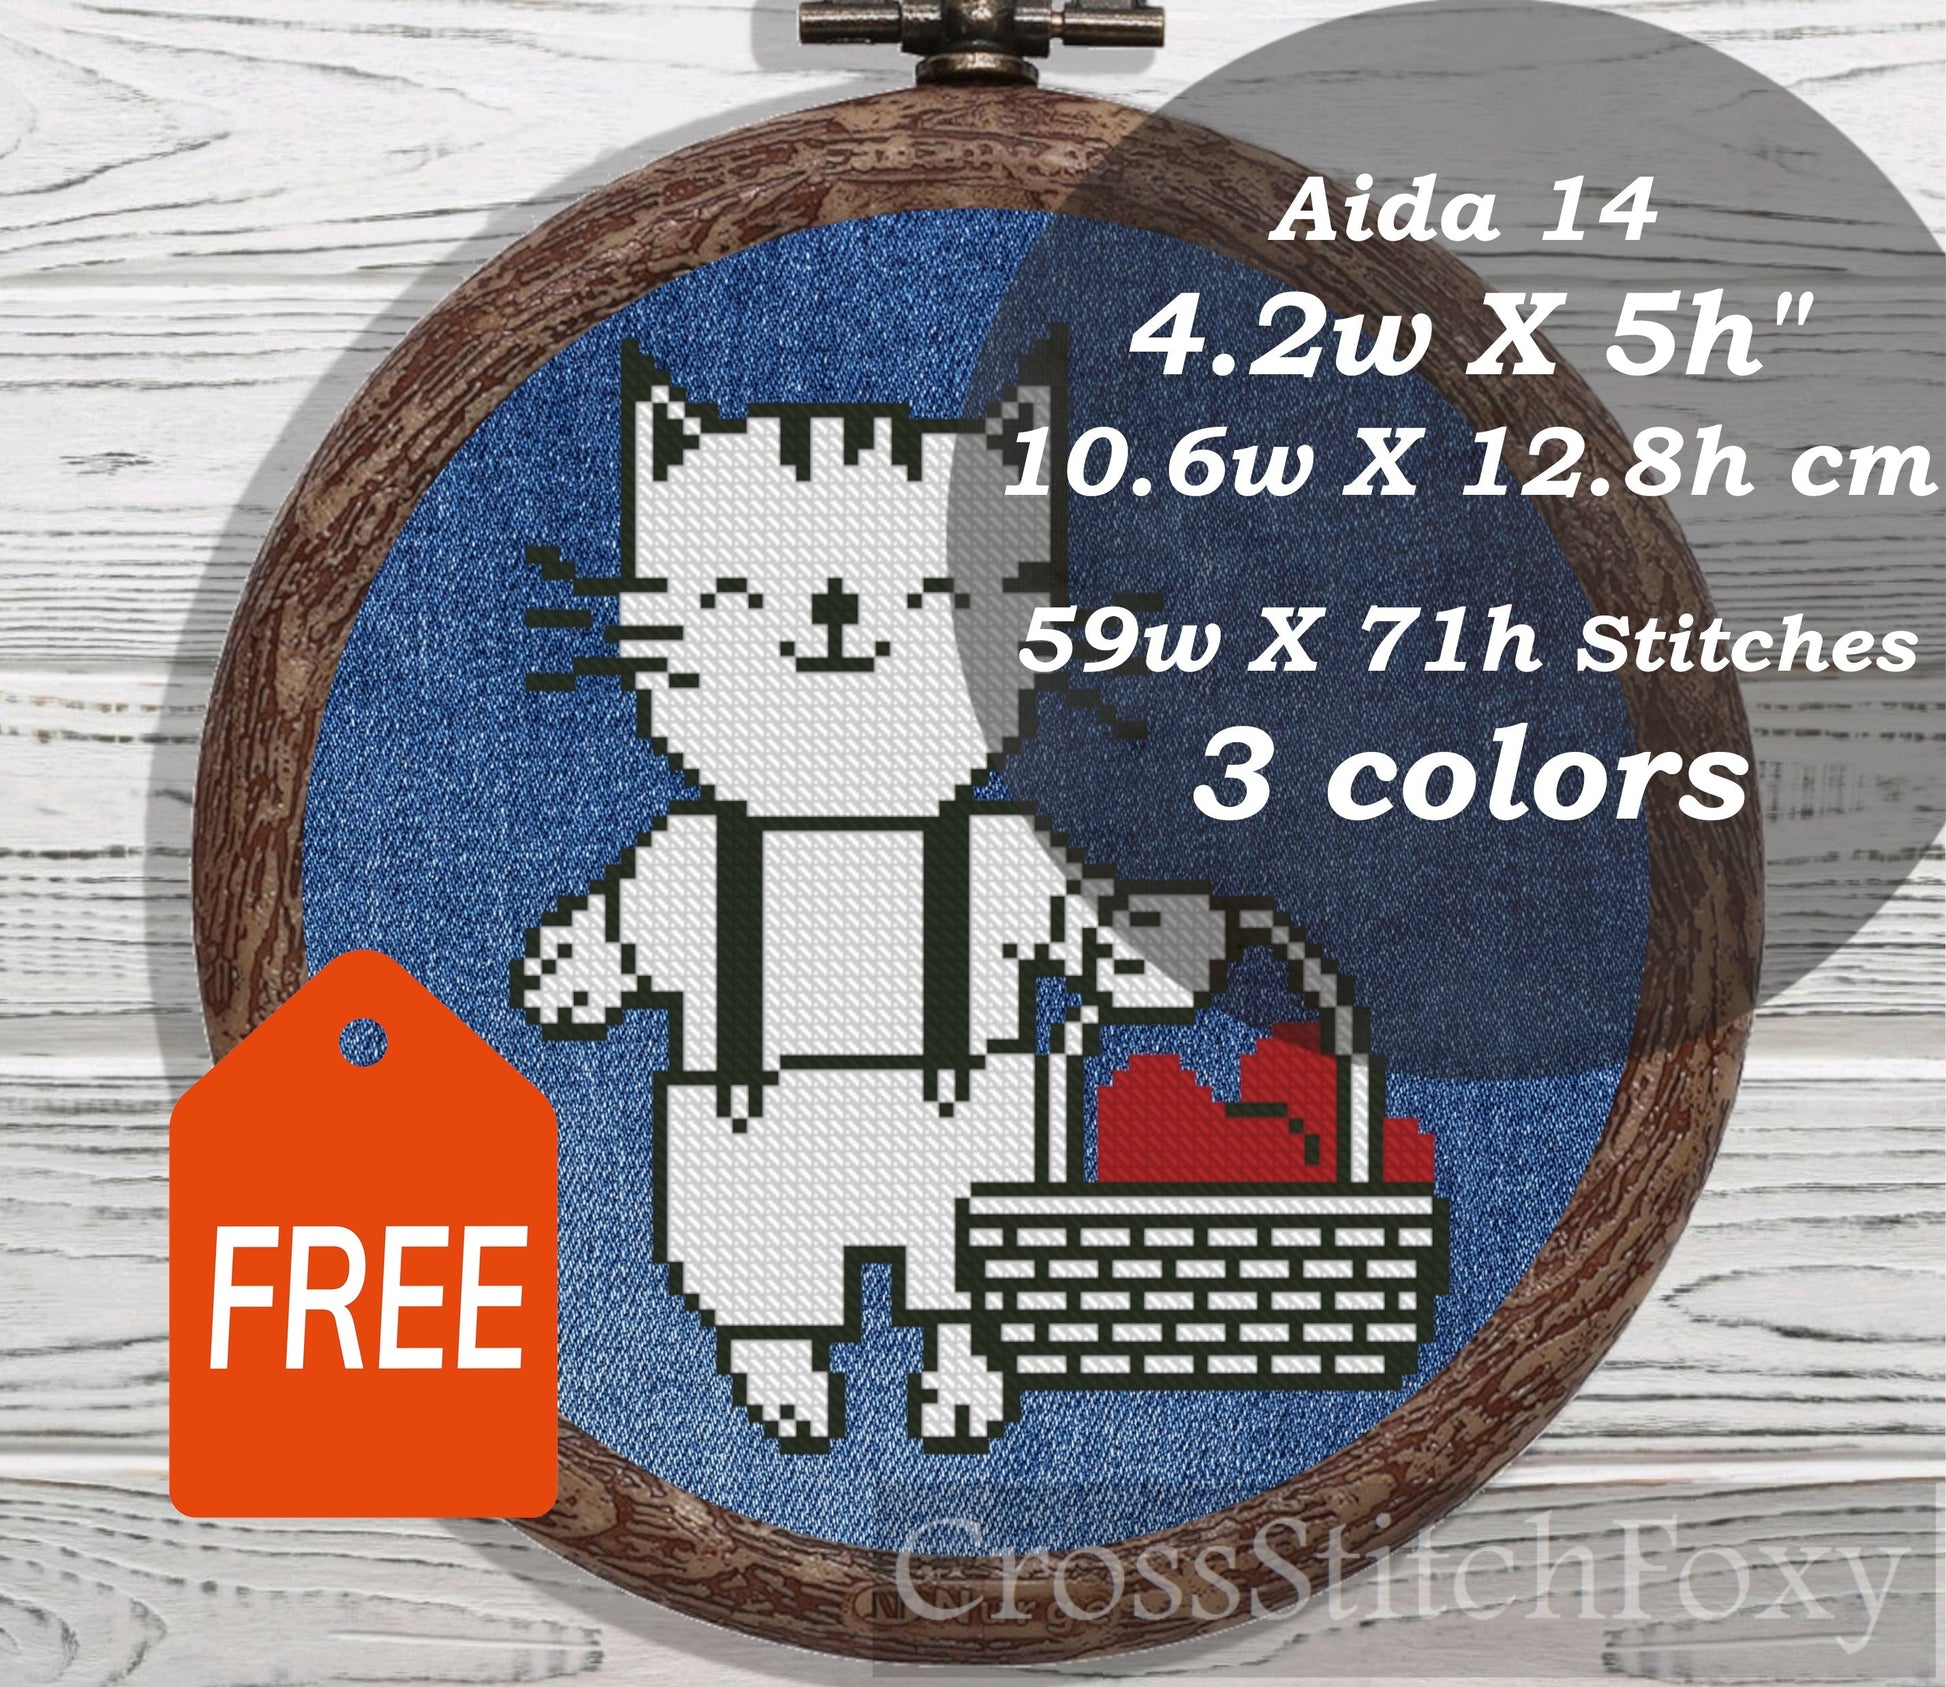 Valentine Cat with Gift cross stitch pattern